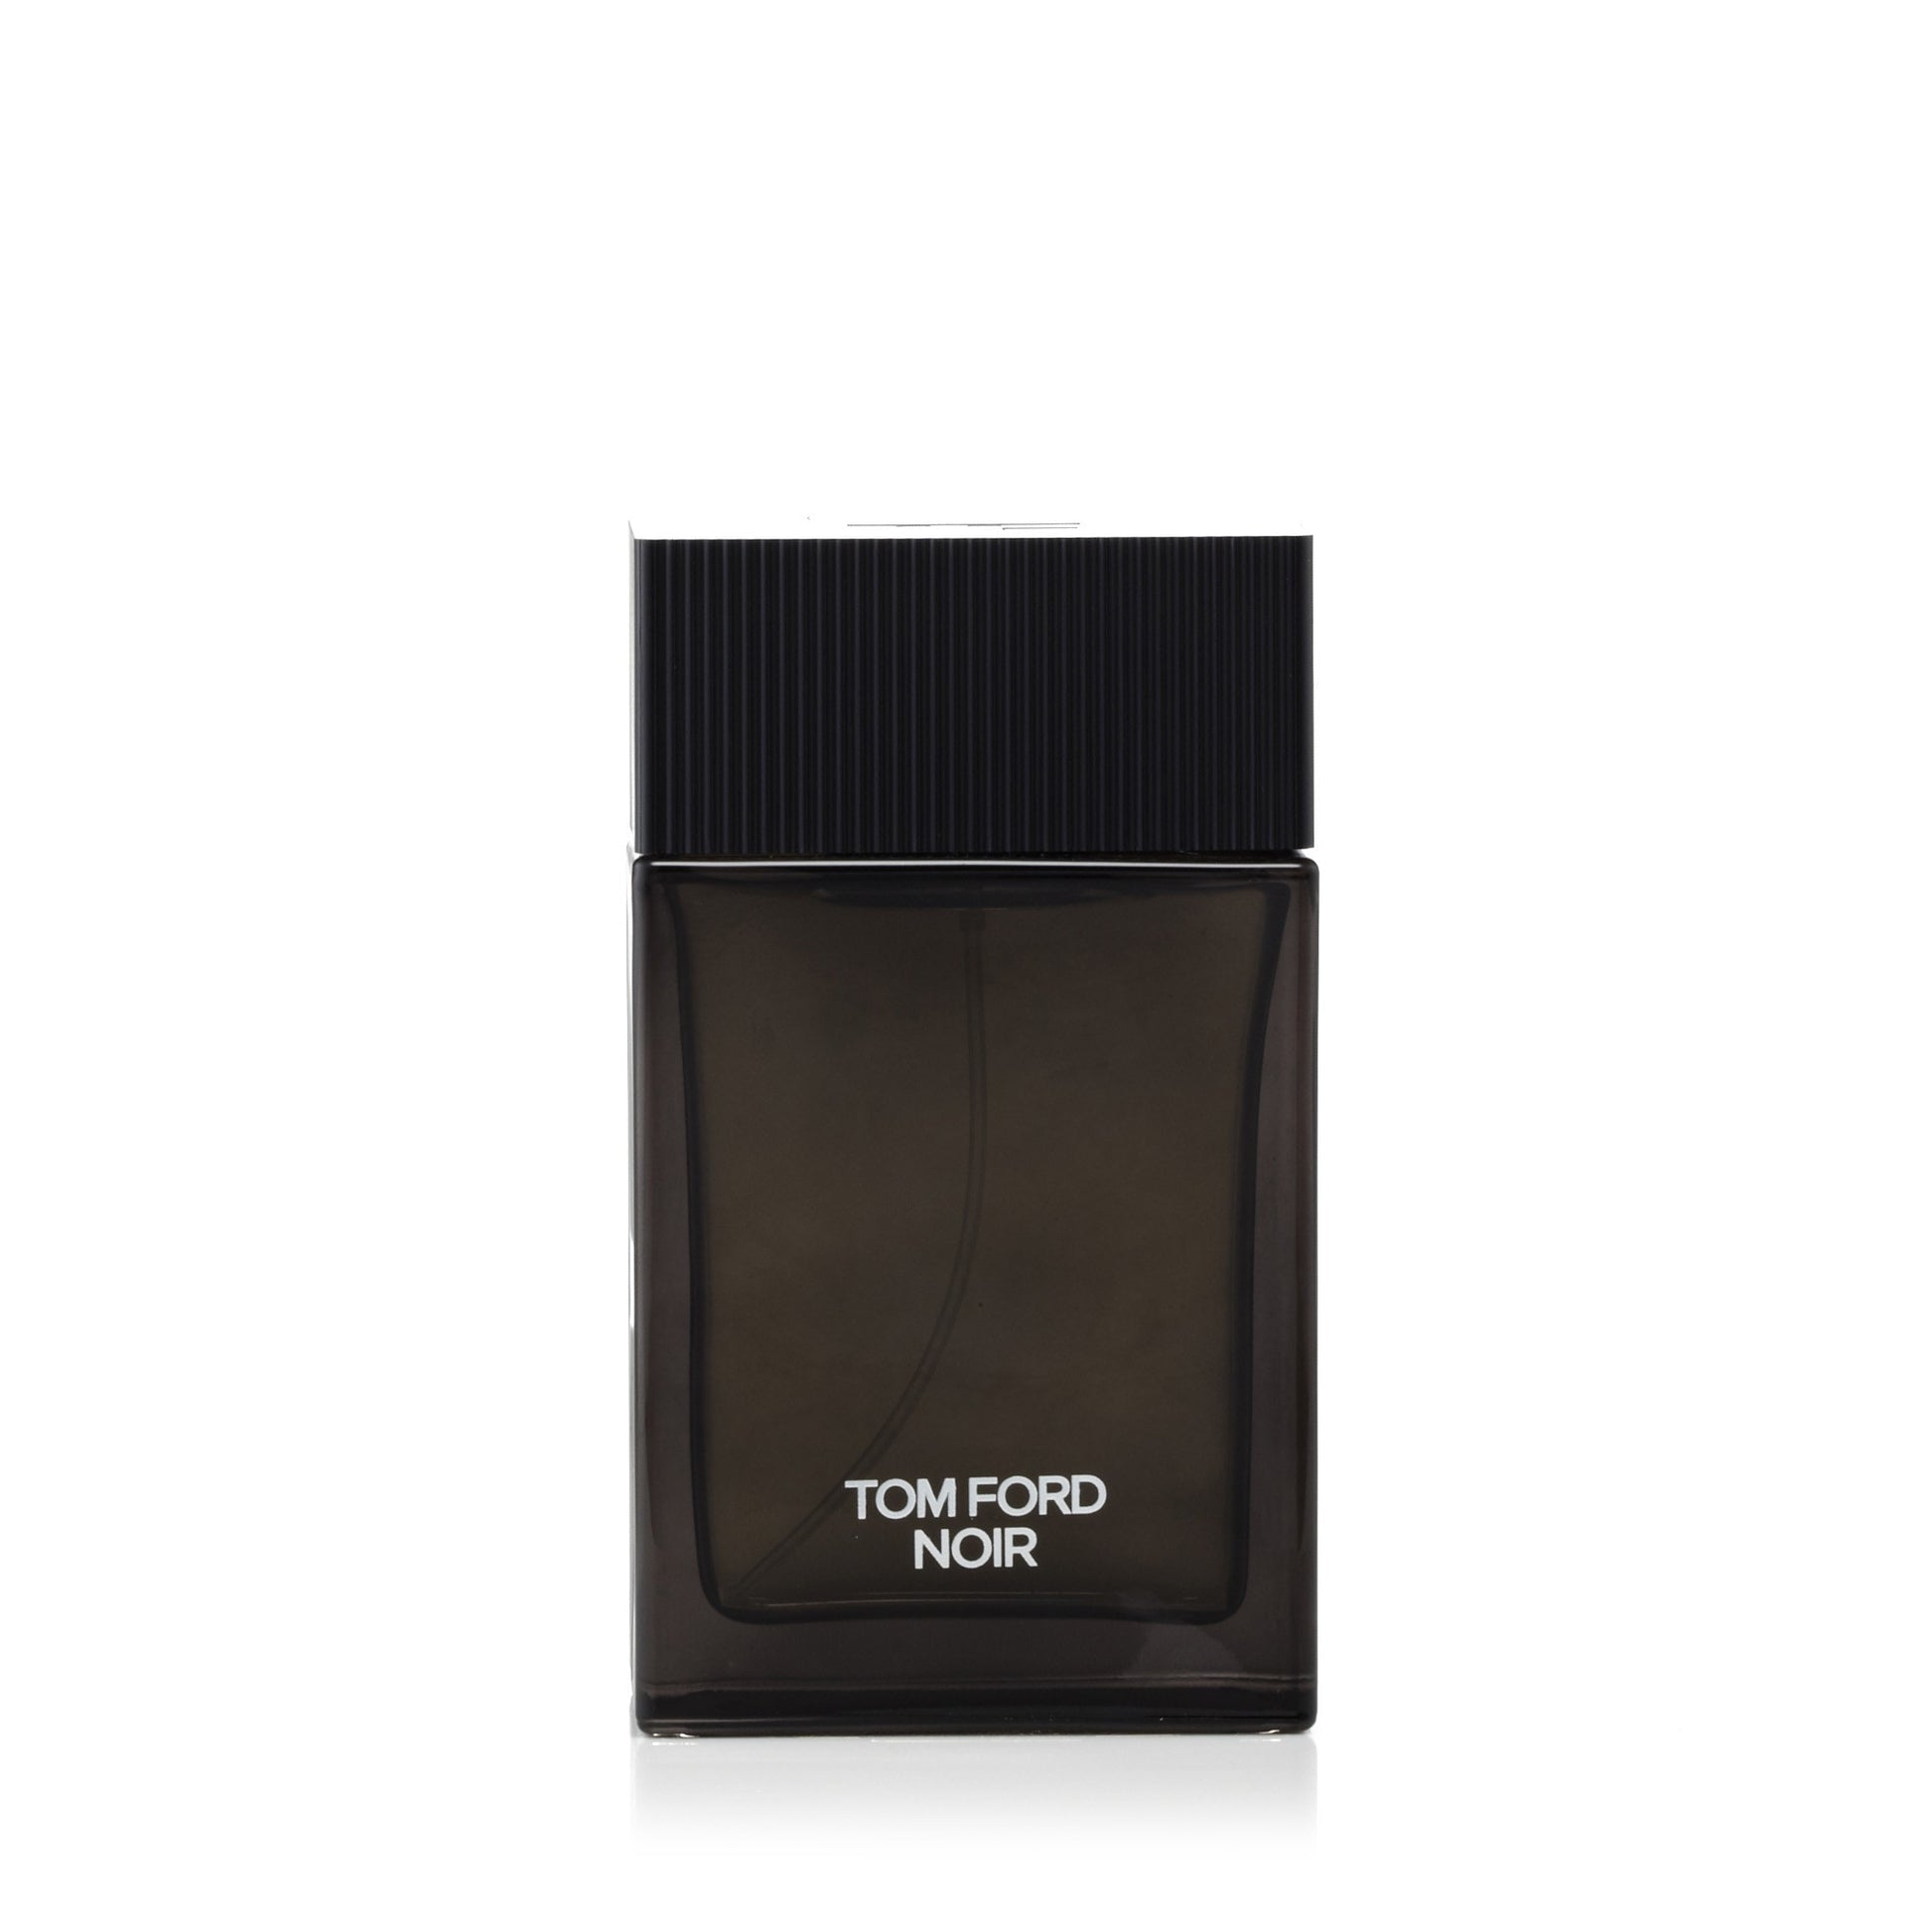 Tom Ford Noir Eau de Parfum Spray for Men by Tom Ford, Product image 2